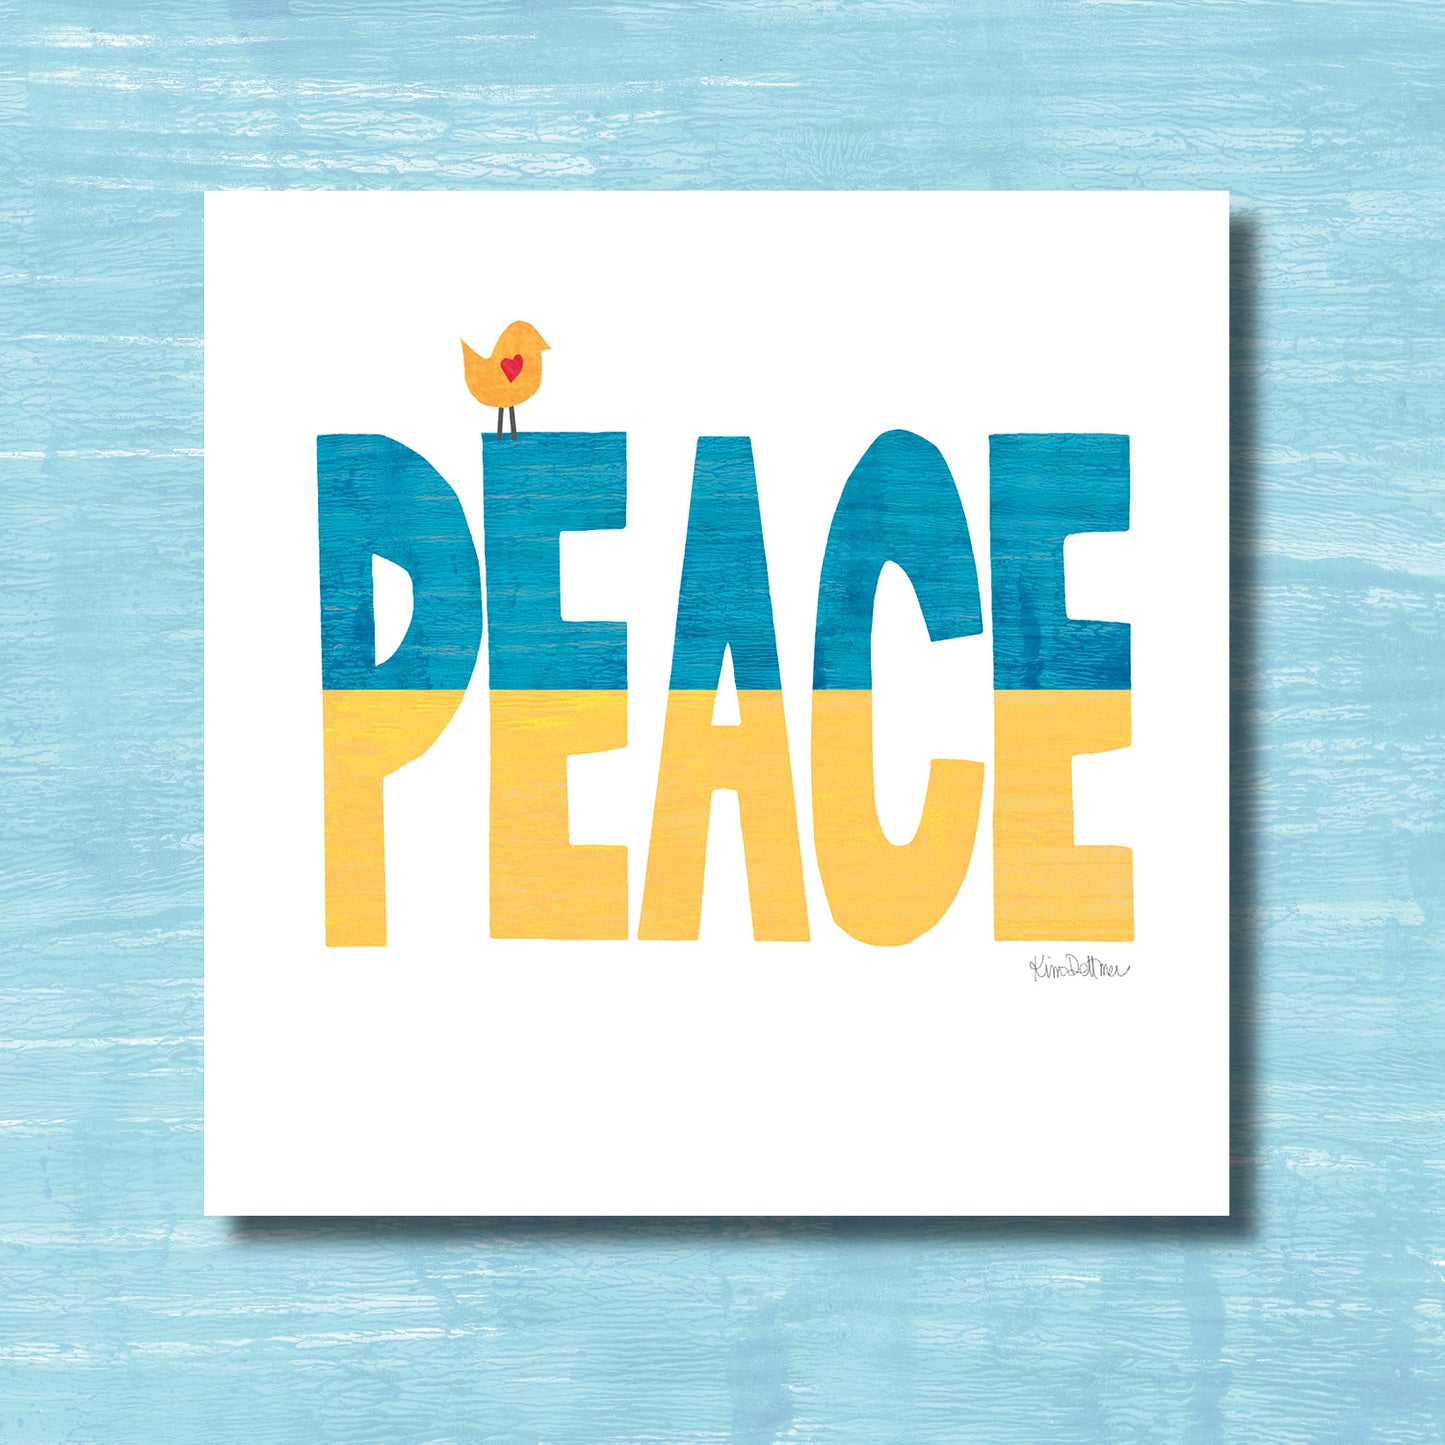 Peace for Ukraine - print